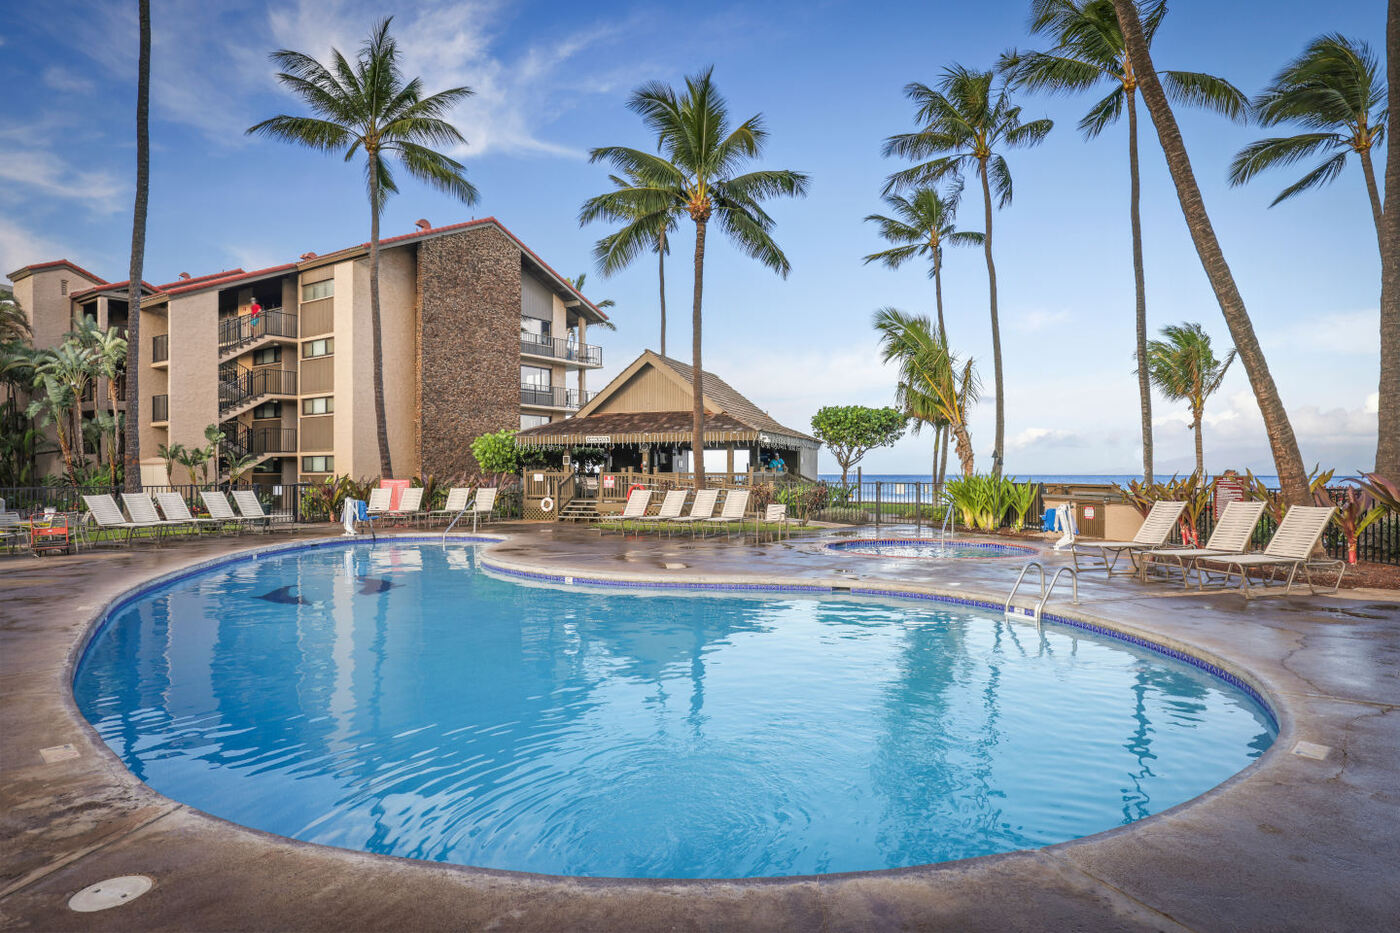 Resort pool and ocean in background